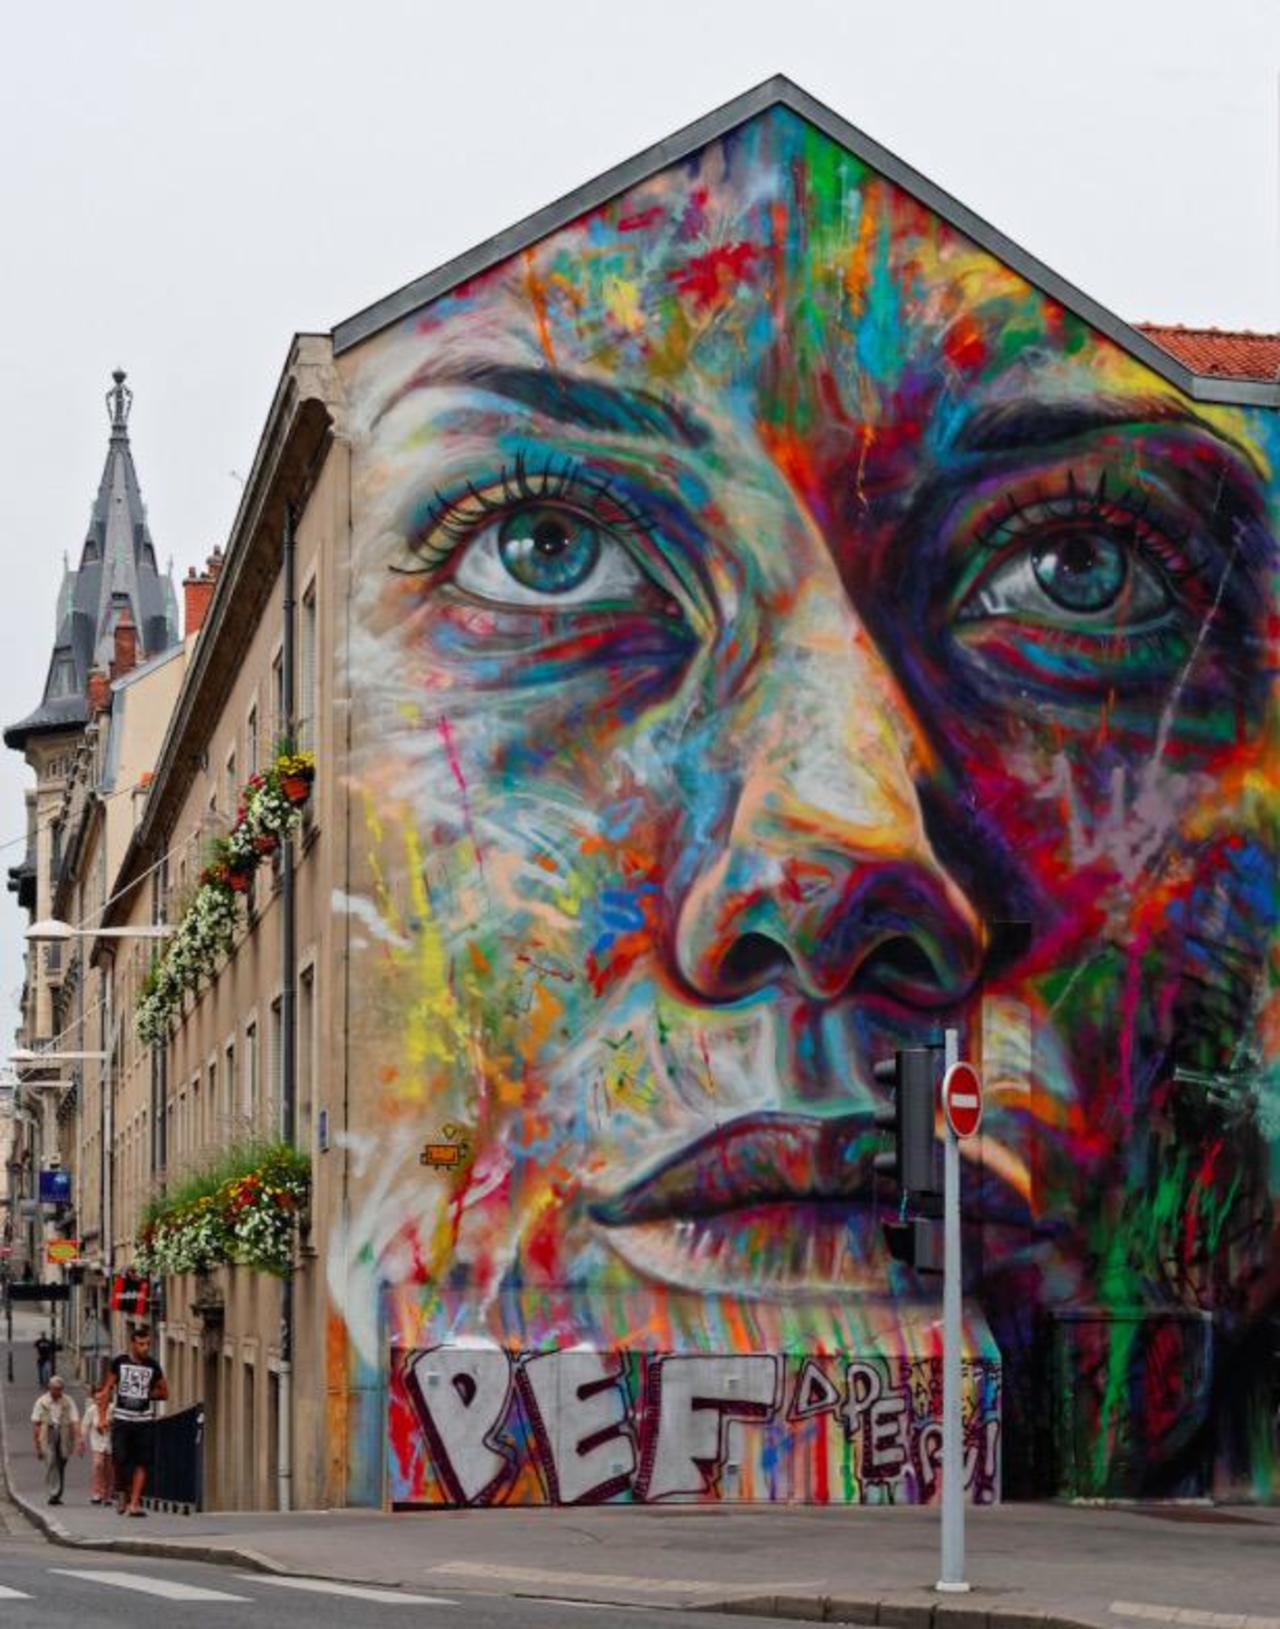 RT @richardbanfa: #streetart David Walker #Paris #switch #bedifferent #graffiti arte #art http://t.co/AKxd3ZpHde